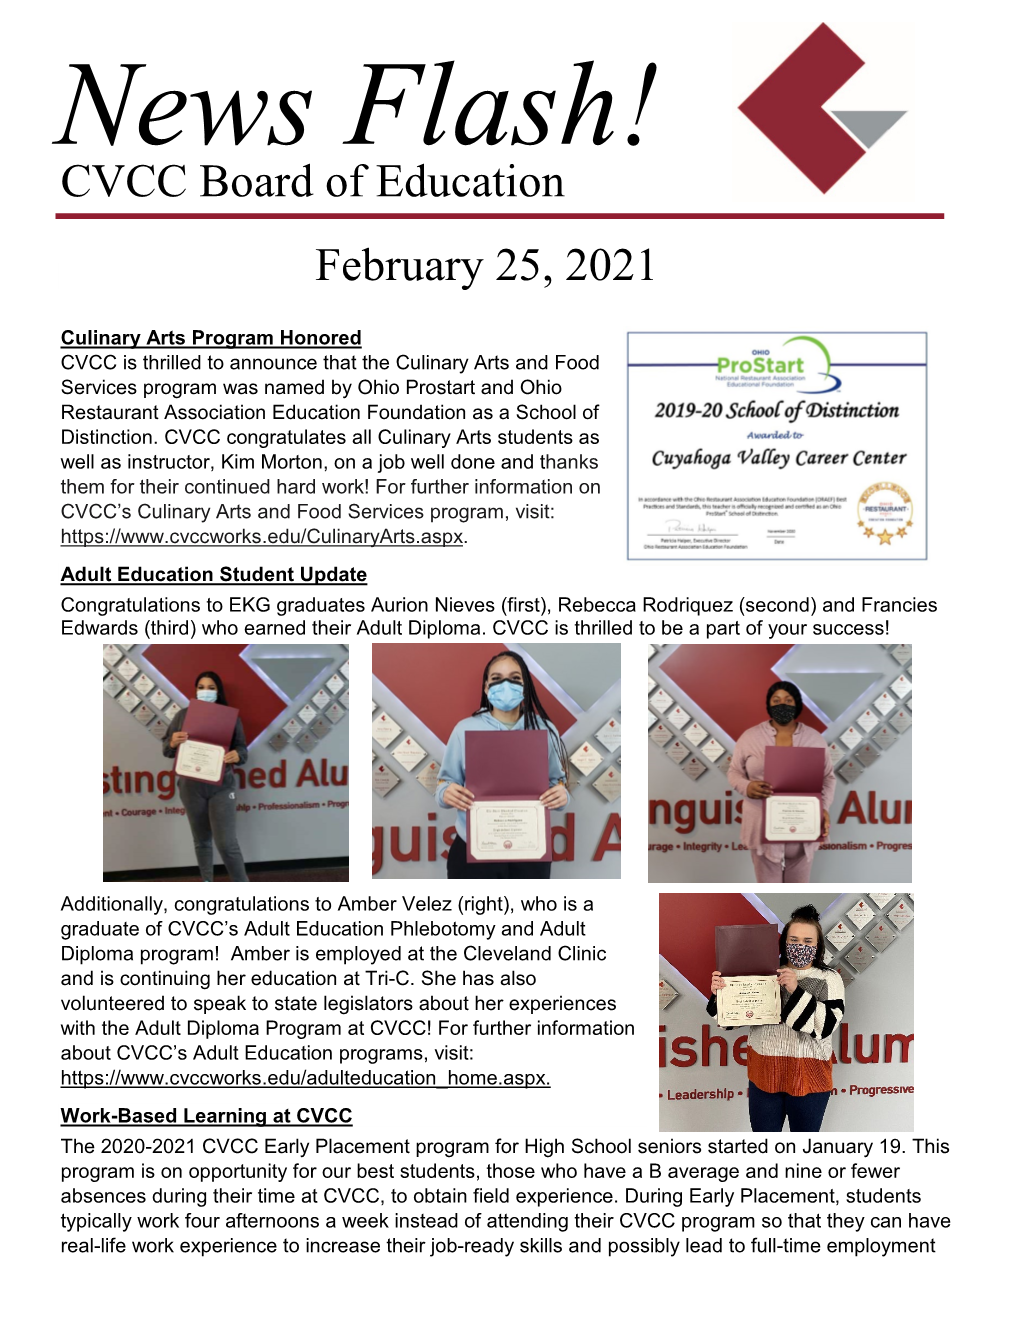 CVCC Board of Education February 25, 2021